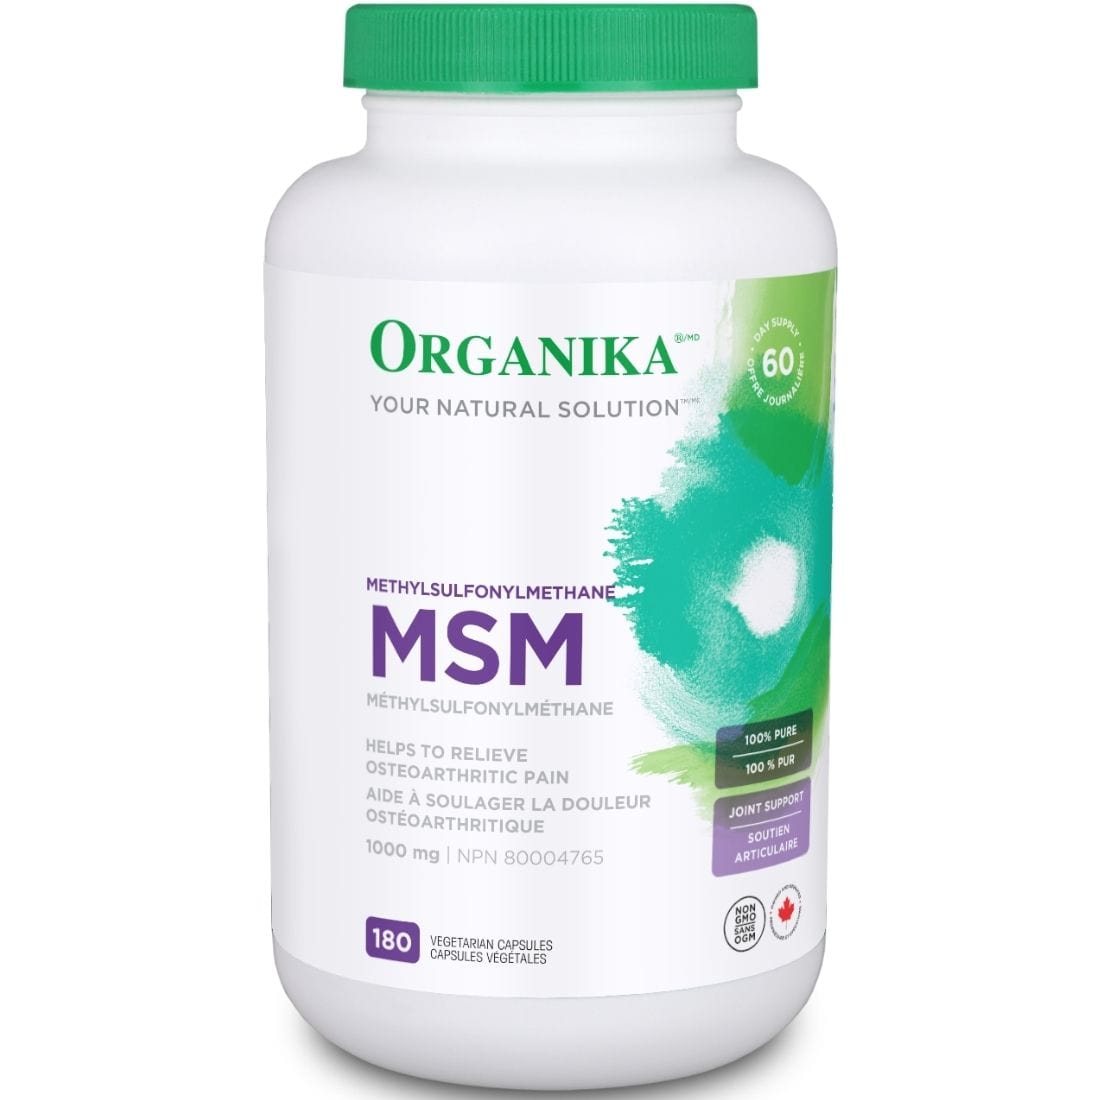 Organika MSM 100% Pure (Helps Relieve Osteoarthritic Pain), 1000mg